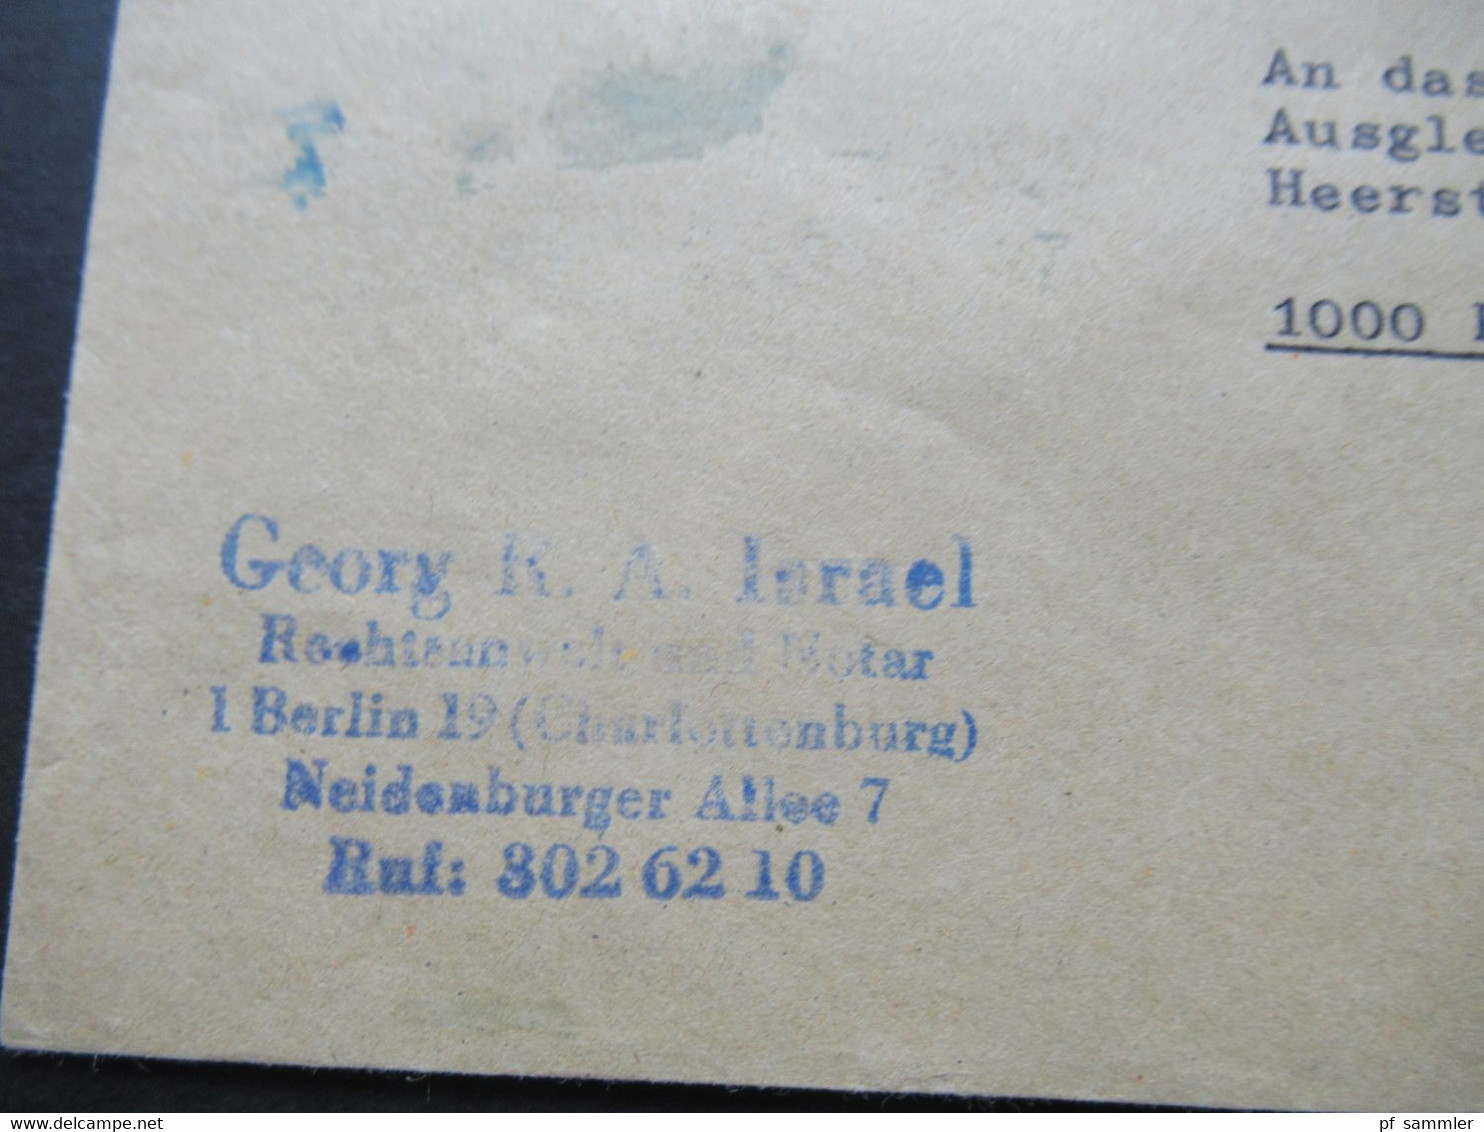 Berlin (West) 1977 Freimarken Industrie U. Technik Nr.497 EFUmschlag Georg R.A. Israel Rechtsanwalt (Judaika) - Covers & Documents